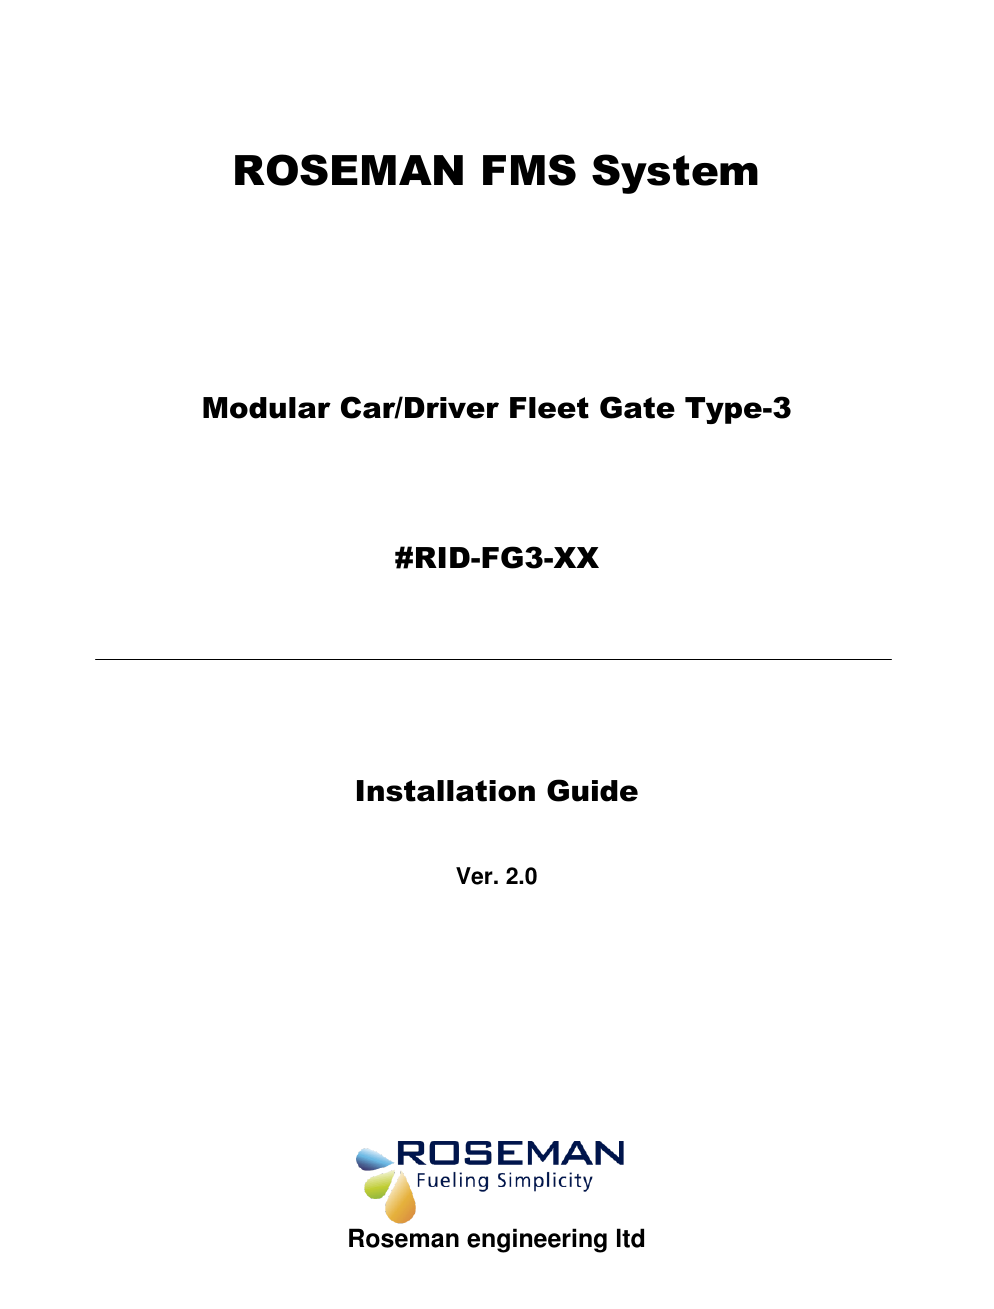      ROSEMAN FMS System        Modular Car/Driver Fleet Gate Type-3    #RID-FG3-XX        Installation Guide   Ver. 2.0            Roseman engineering ltd 